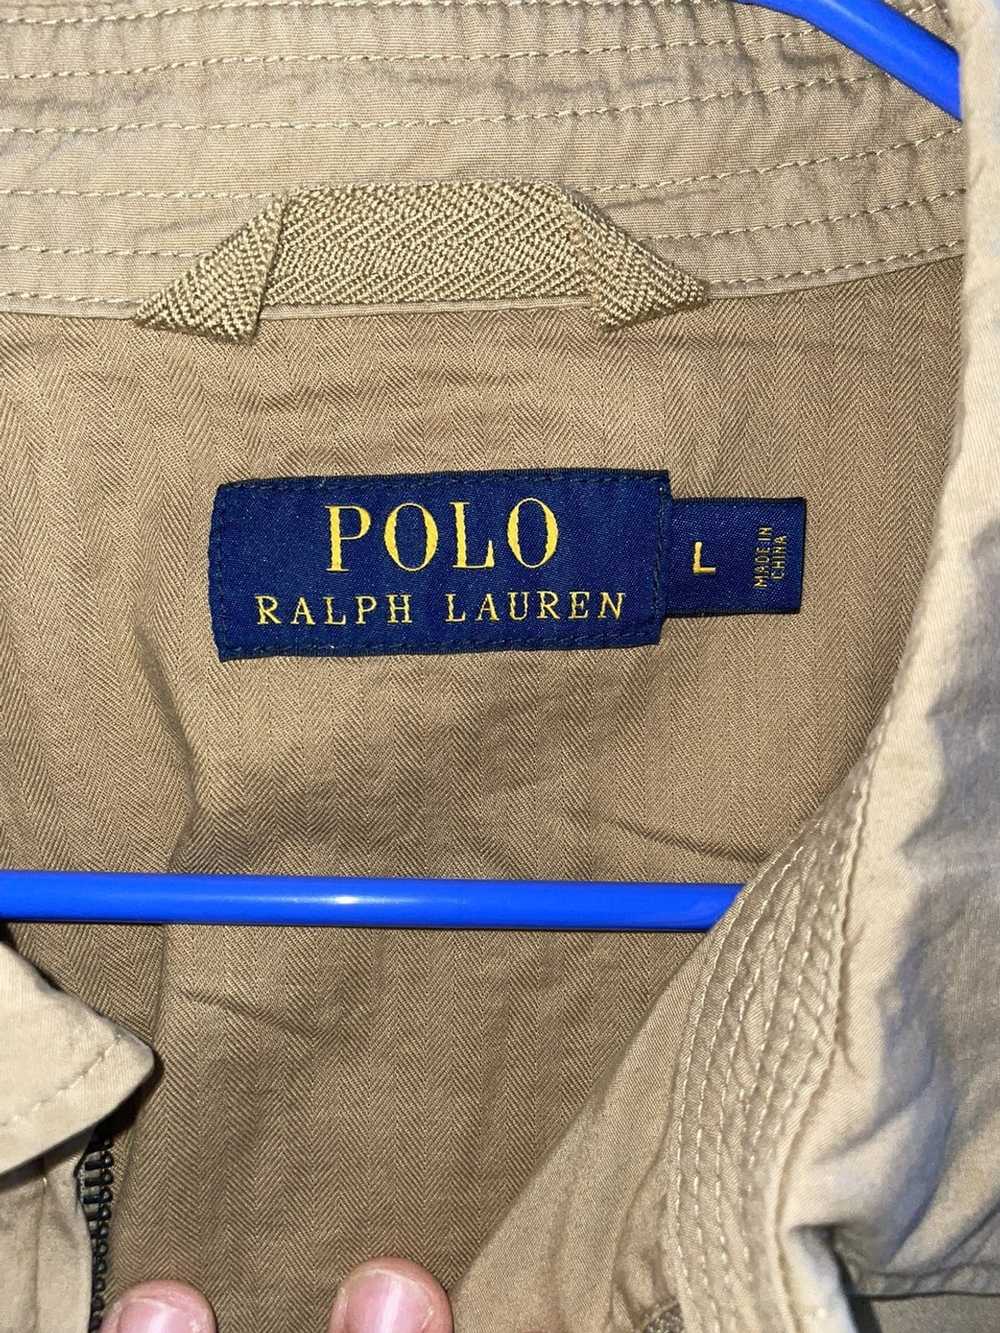 Polo Ralph Lauren Polo Ralph Lauren Light Jacket - image 6